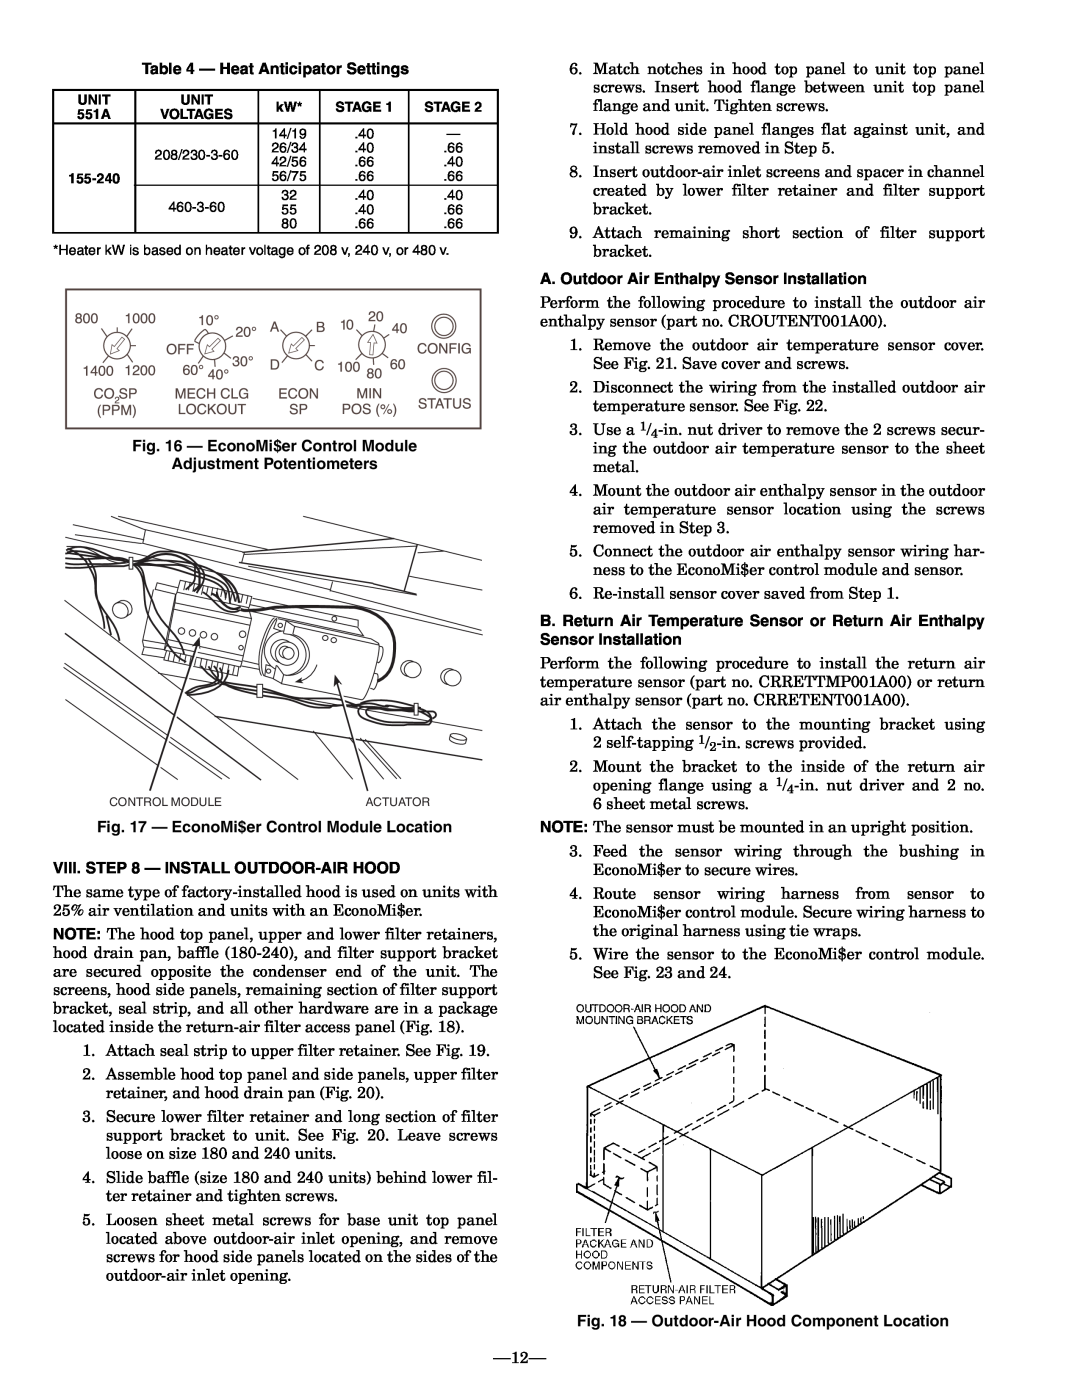 Bryant 551A operation manual 12, Heat Anticipator Settings, EconoMi$er Control Module, Adjustment Potentiometers 